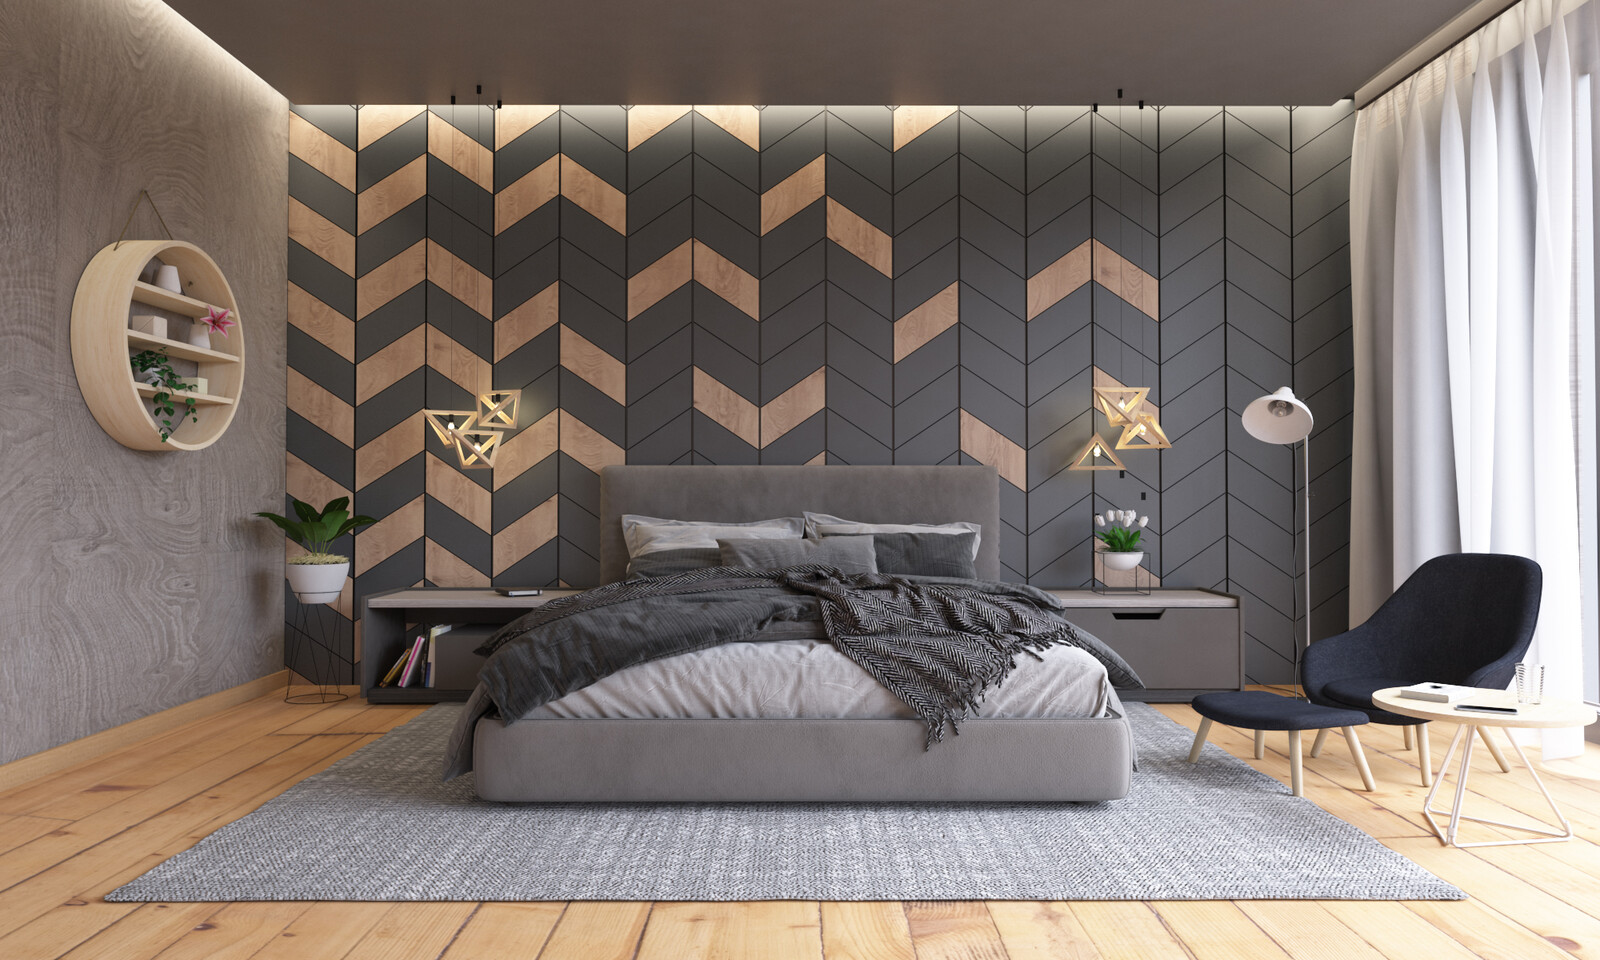 Fidel Branche - Modern Bedroom Interior Design - ArchViz